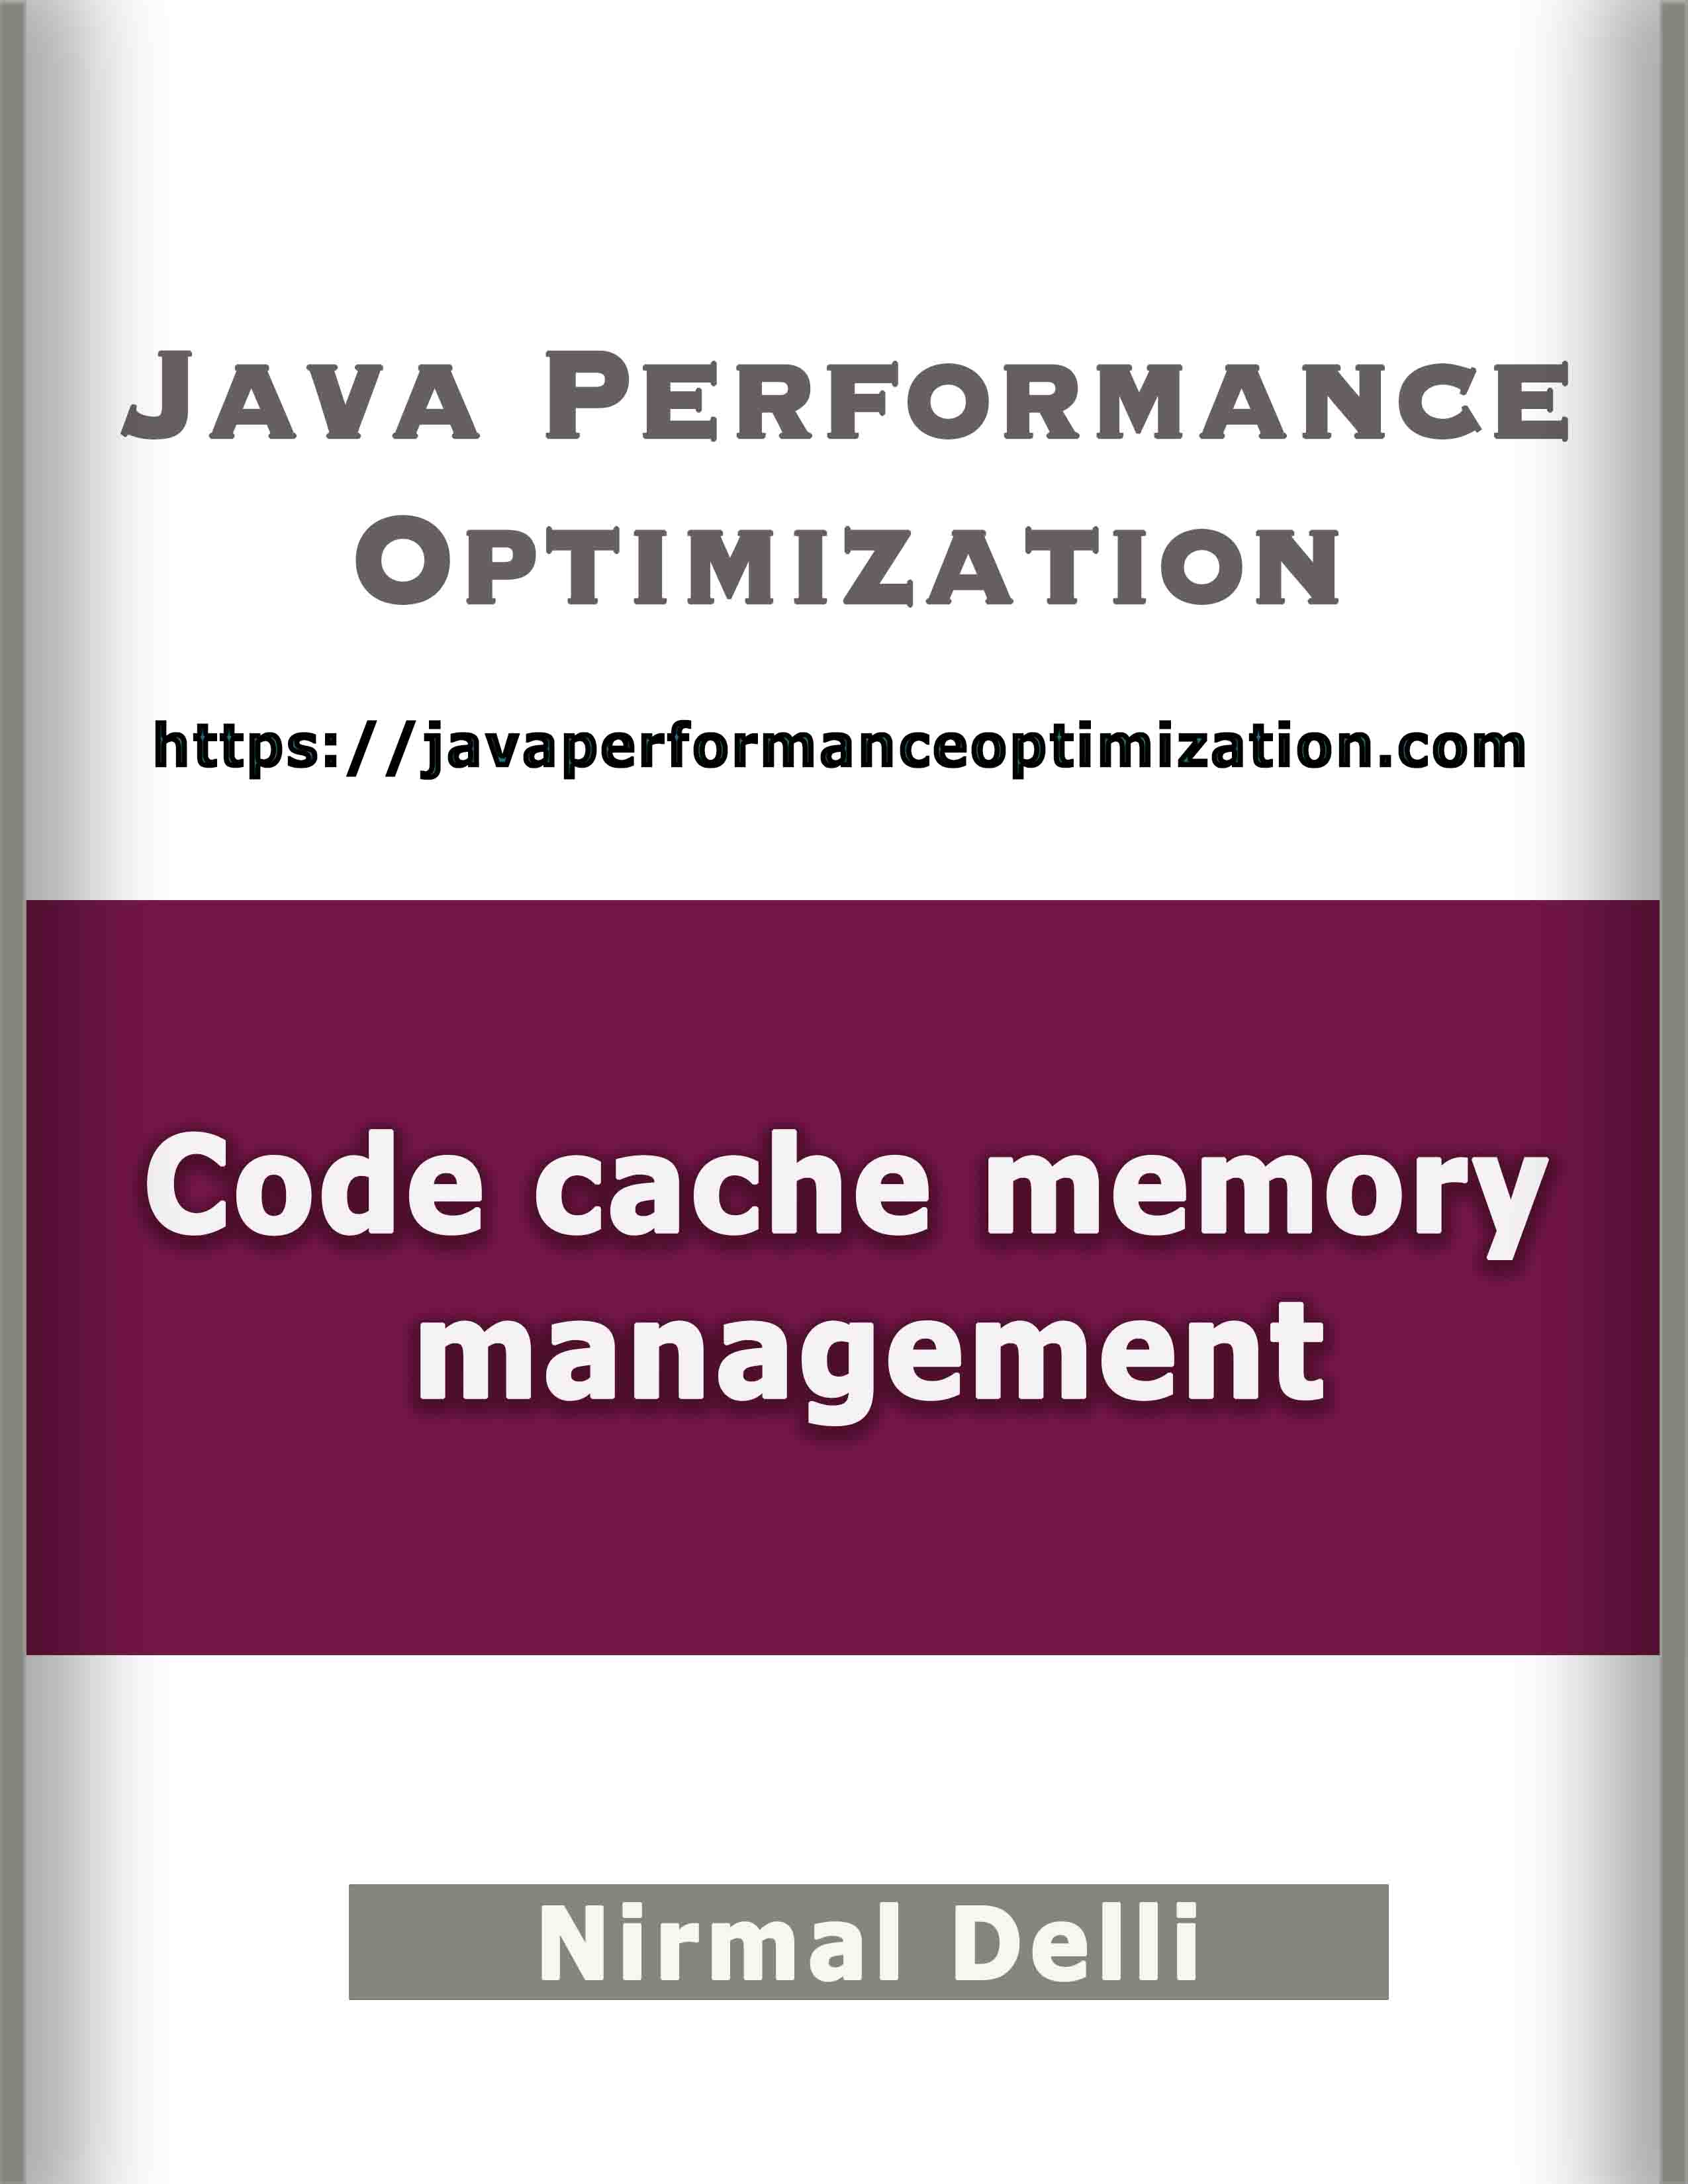 Java performance optimization - Code cache memory management